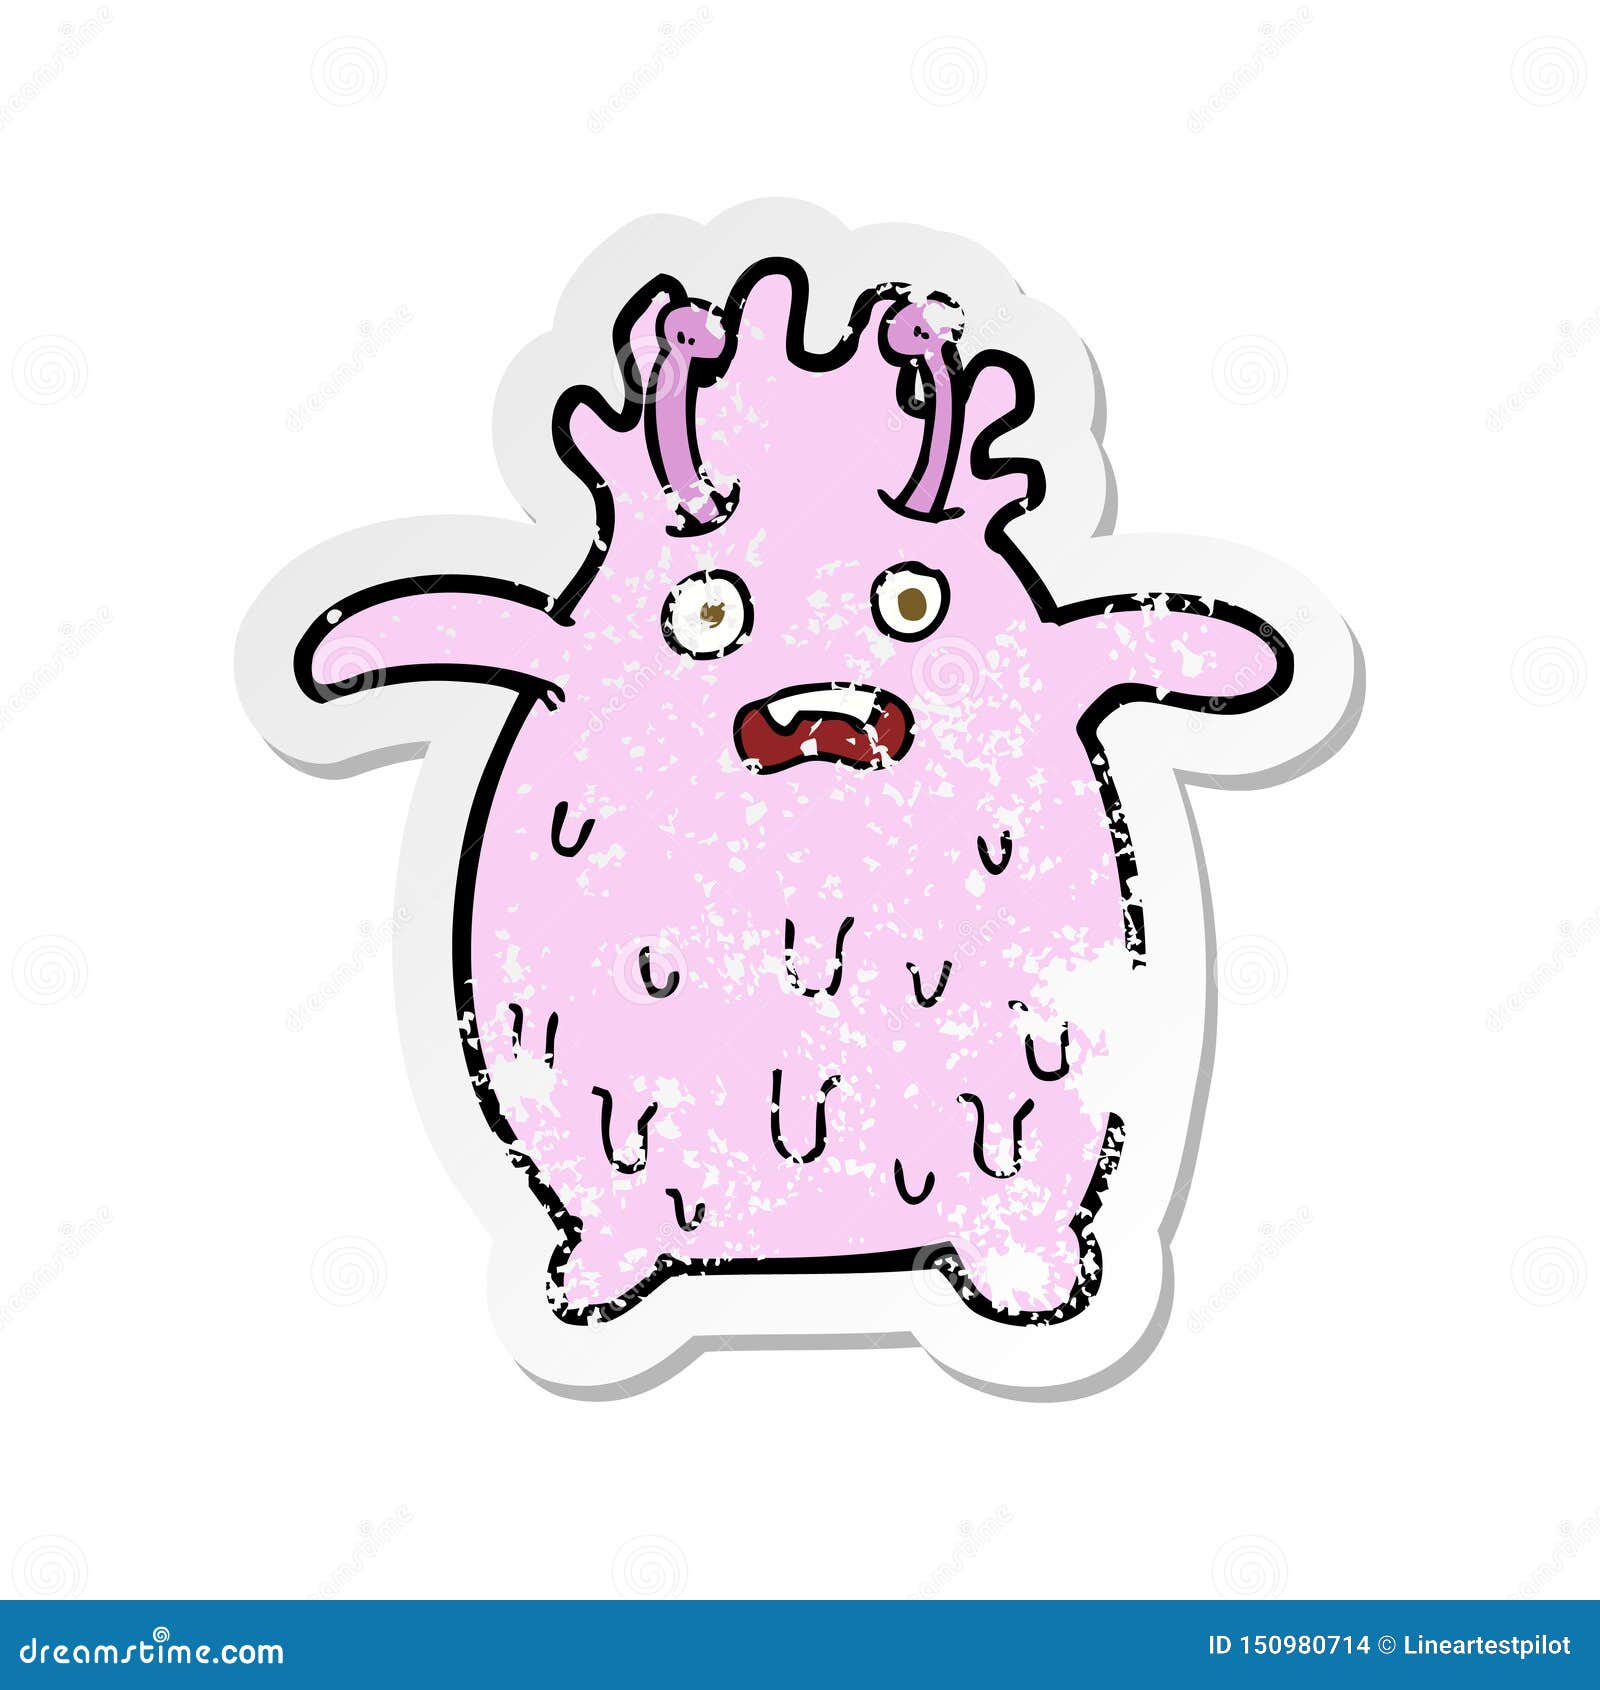 A Creative Retro Distressed Sticker of a Cartoon Funny Slime Monster ...